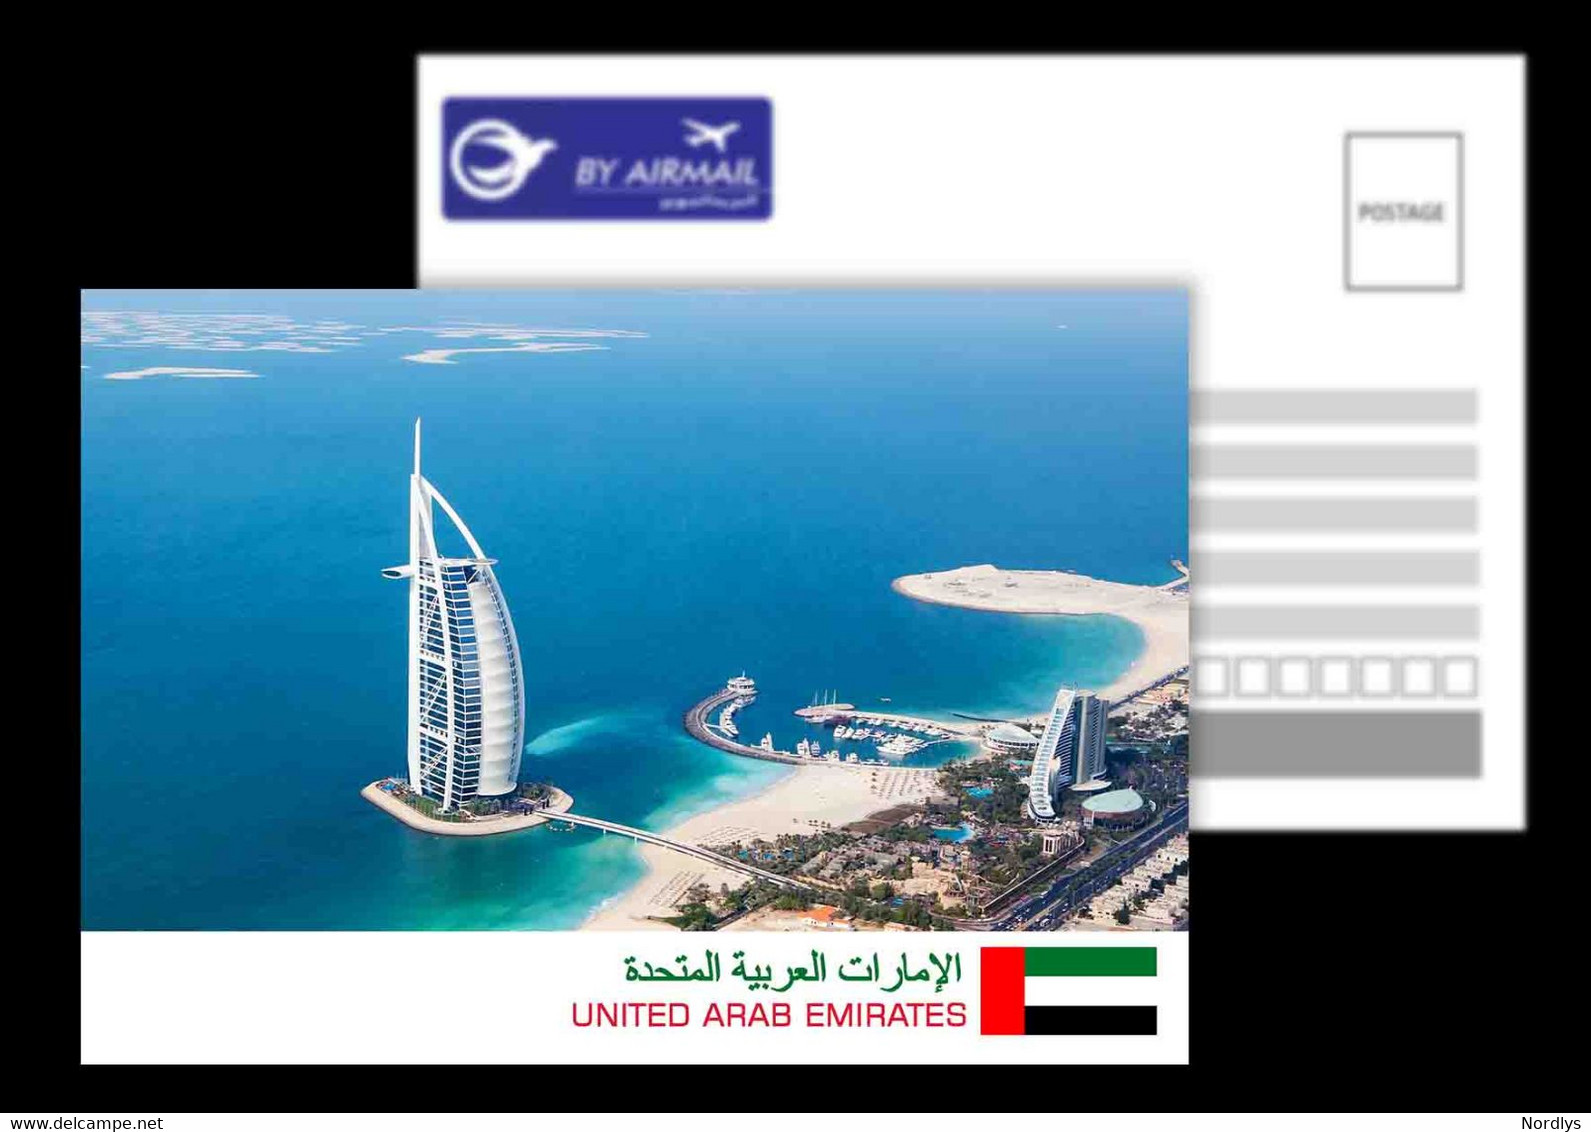 UAE / United Arab Emirates / Dubai / Postcard /View Card - United Arab Emirates